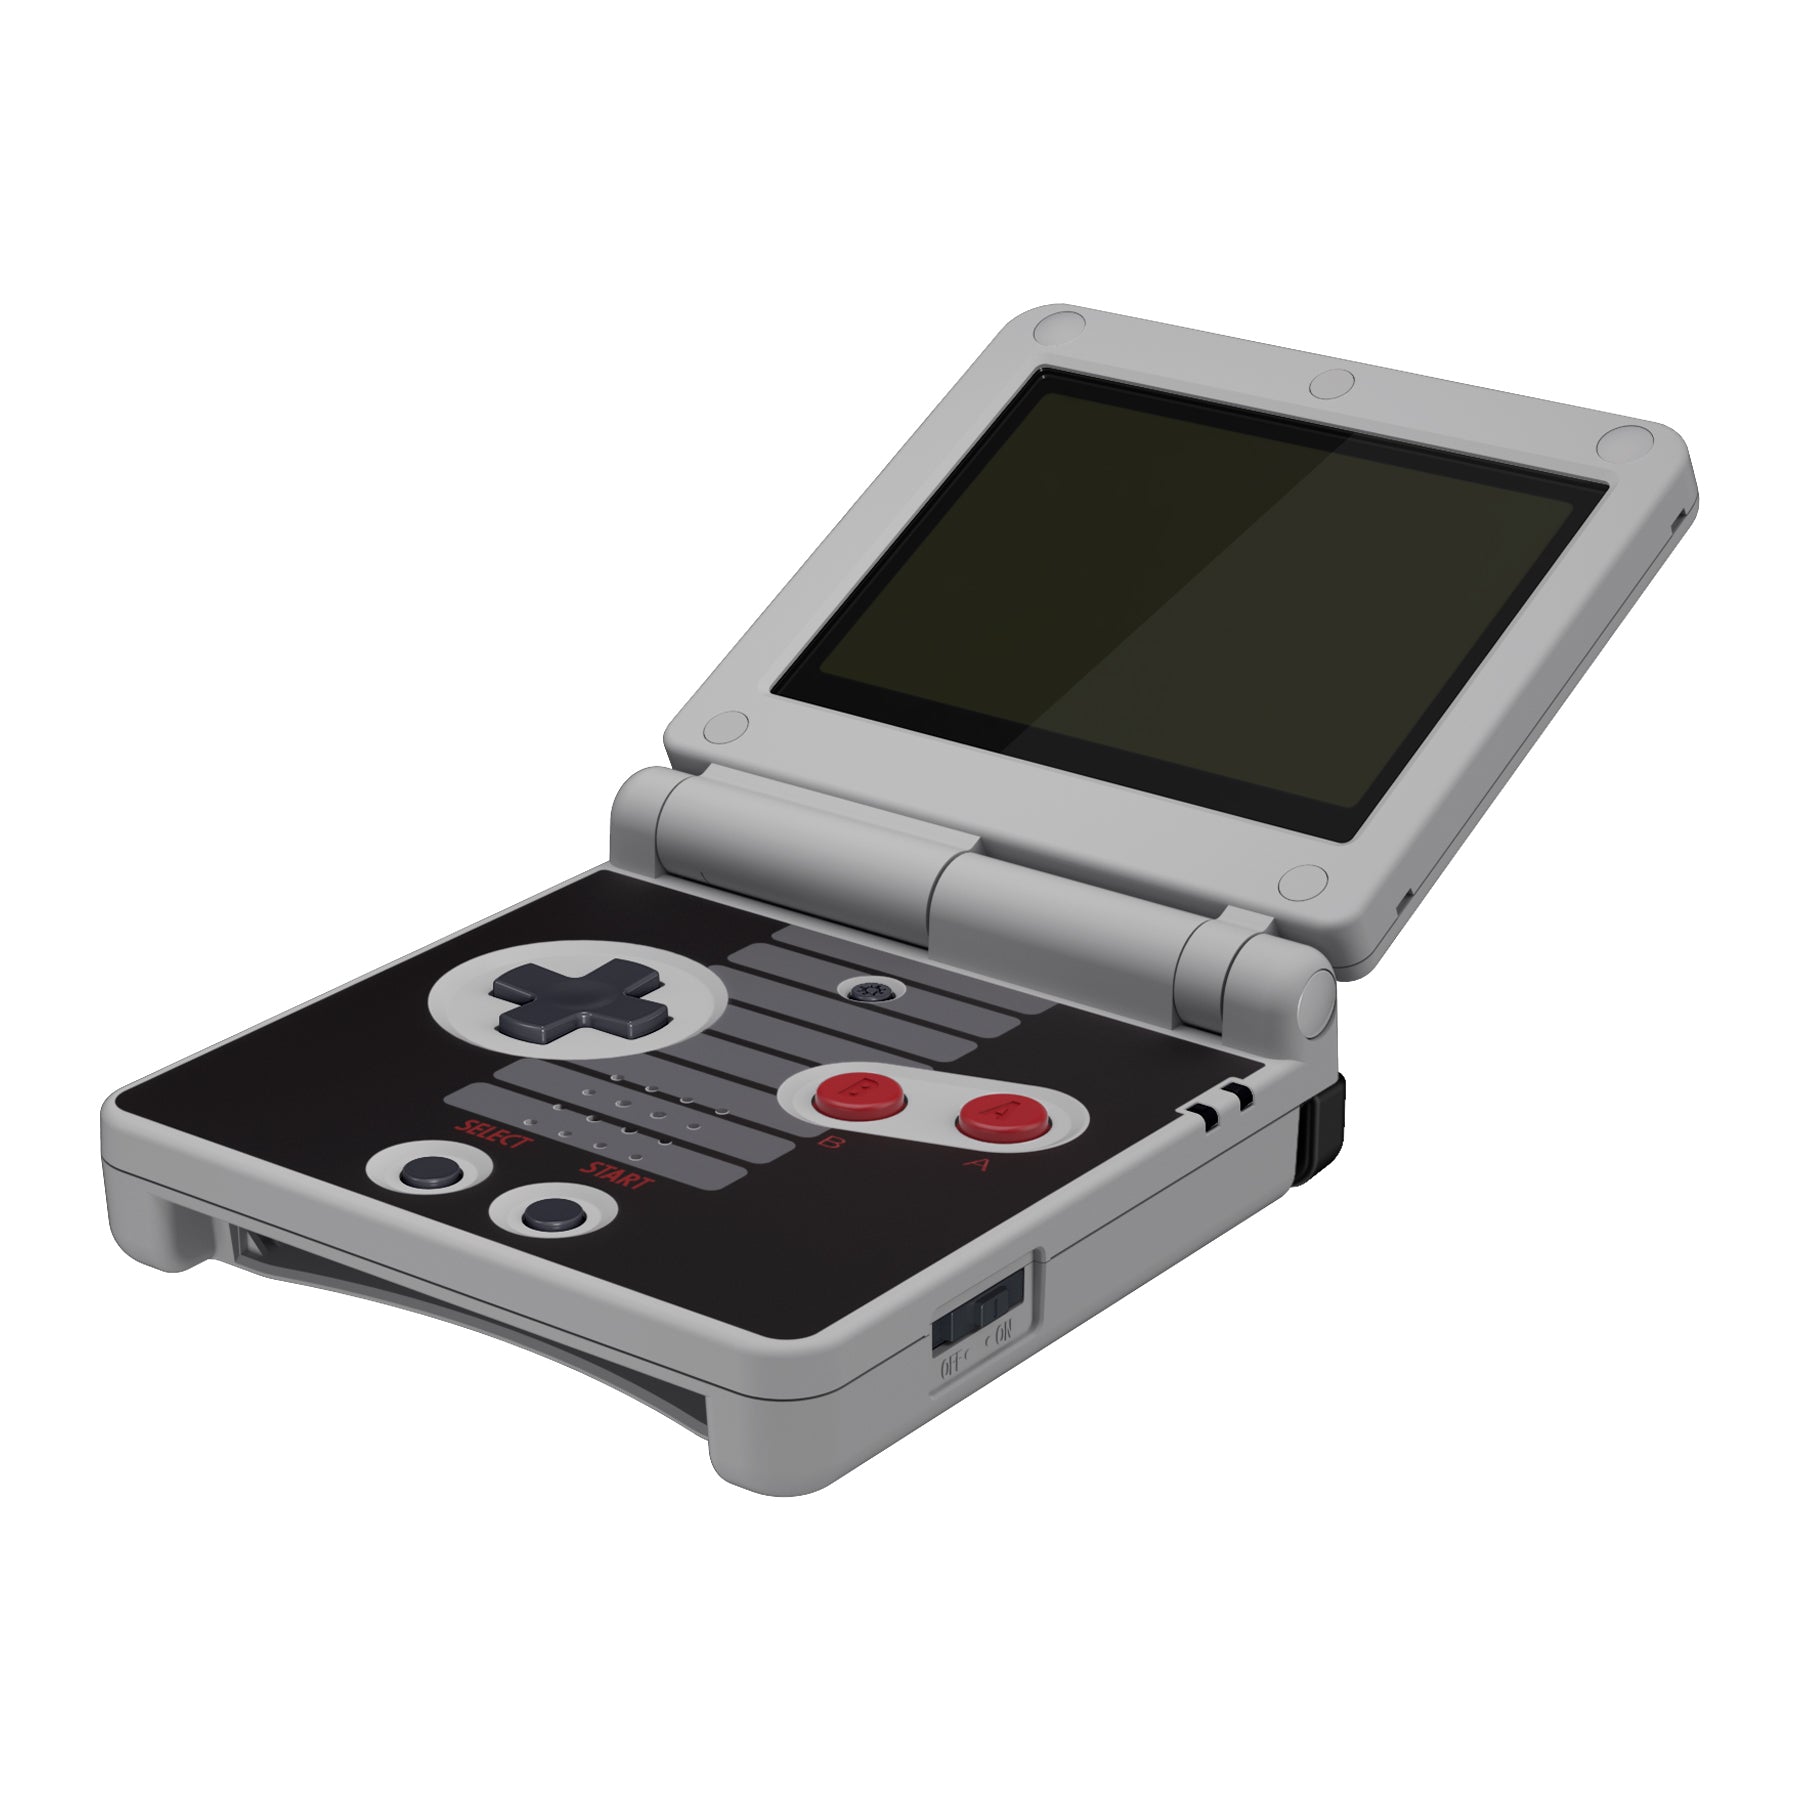 Nintendo Game Boy Advance SP with AC